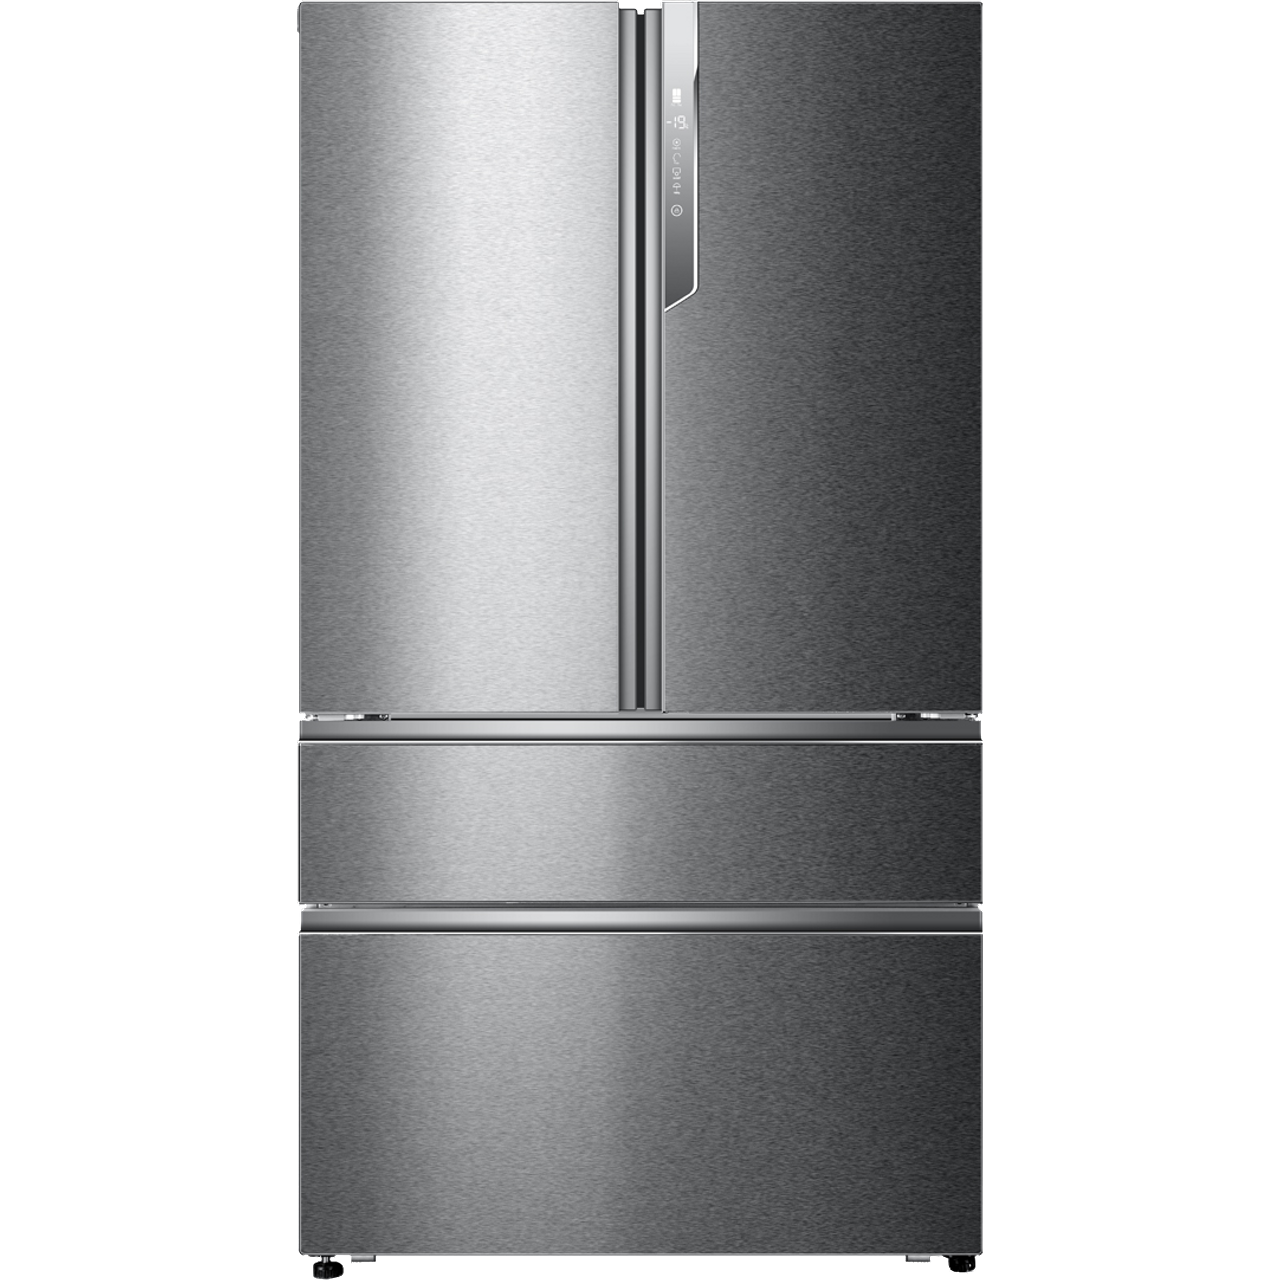 34+ Best american fridge freezer 2020 uk info